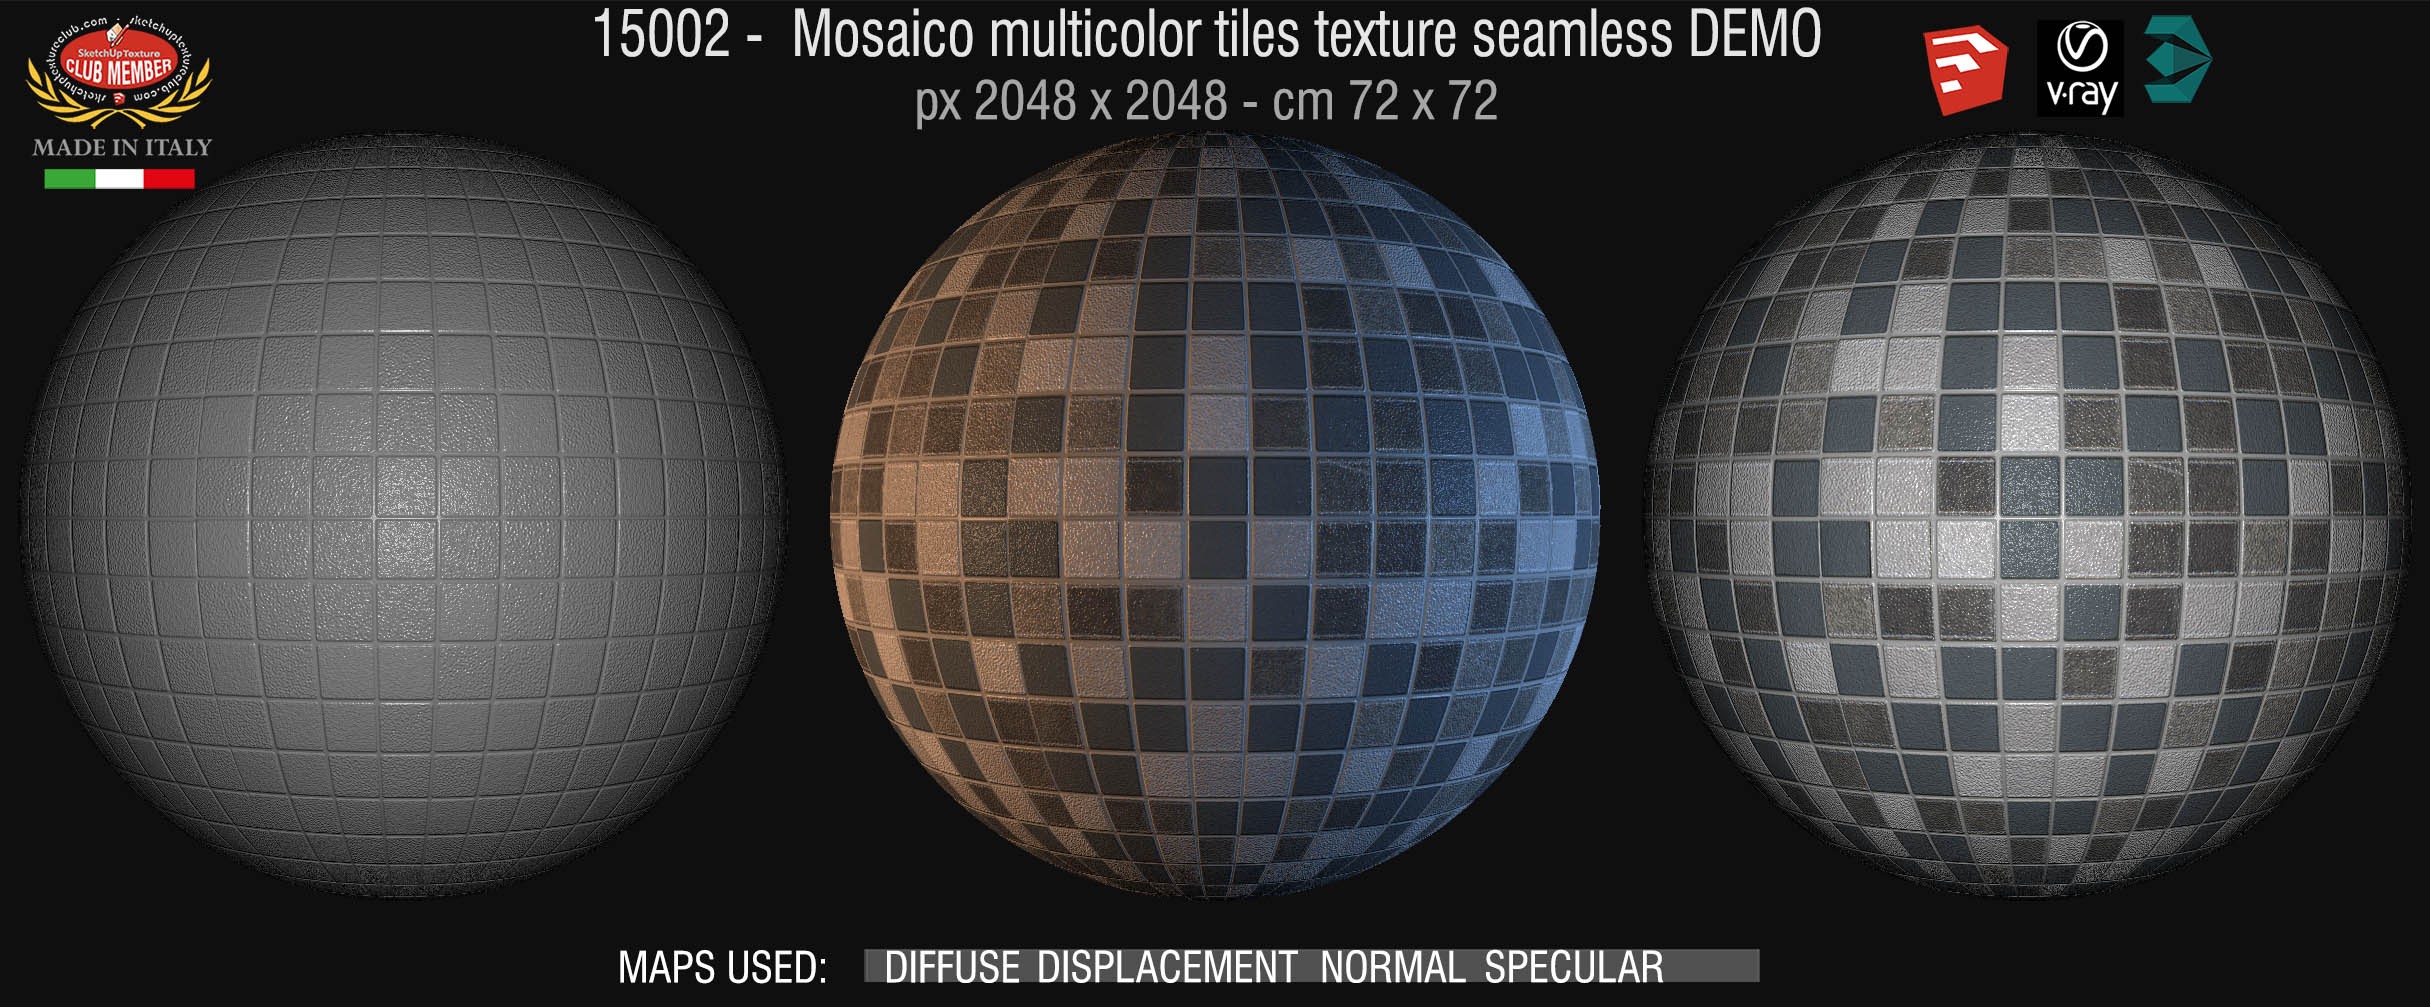 15002 Mosaico multicolor tiles texture seamless + maps DEMO